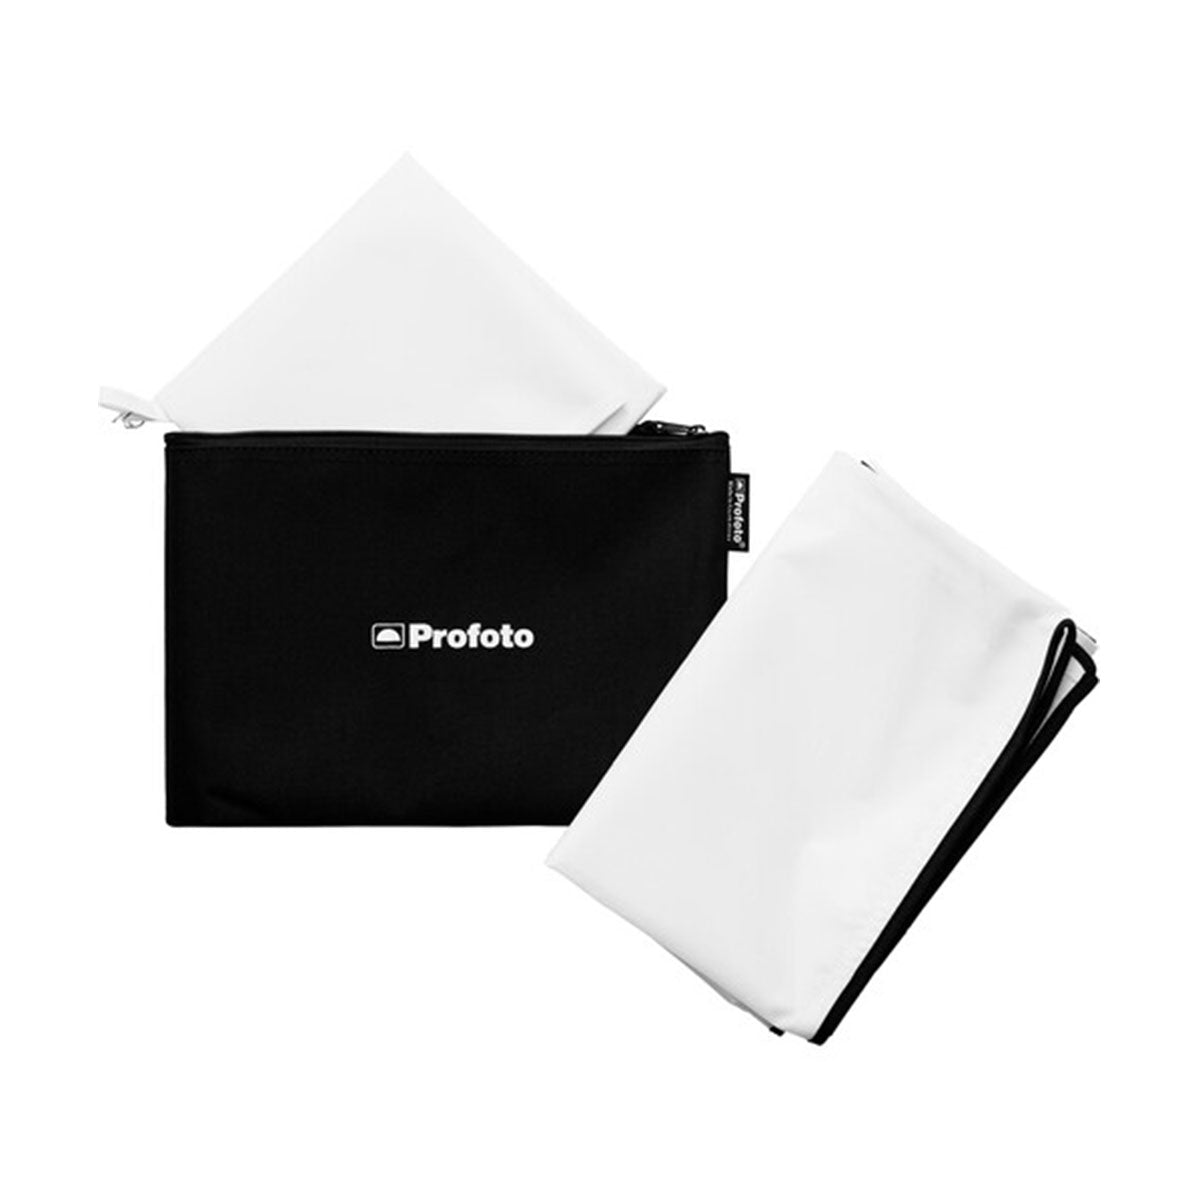 Profoto Rectangle Softbox 2x3’ Diffuser Kit 0.5 f-stop